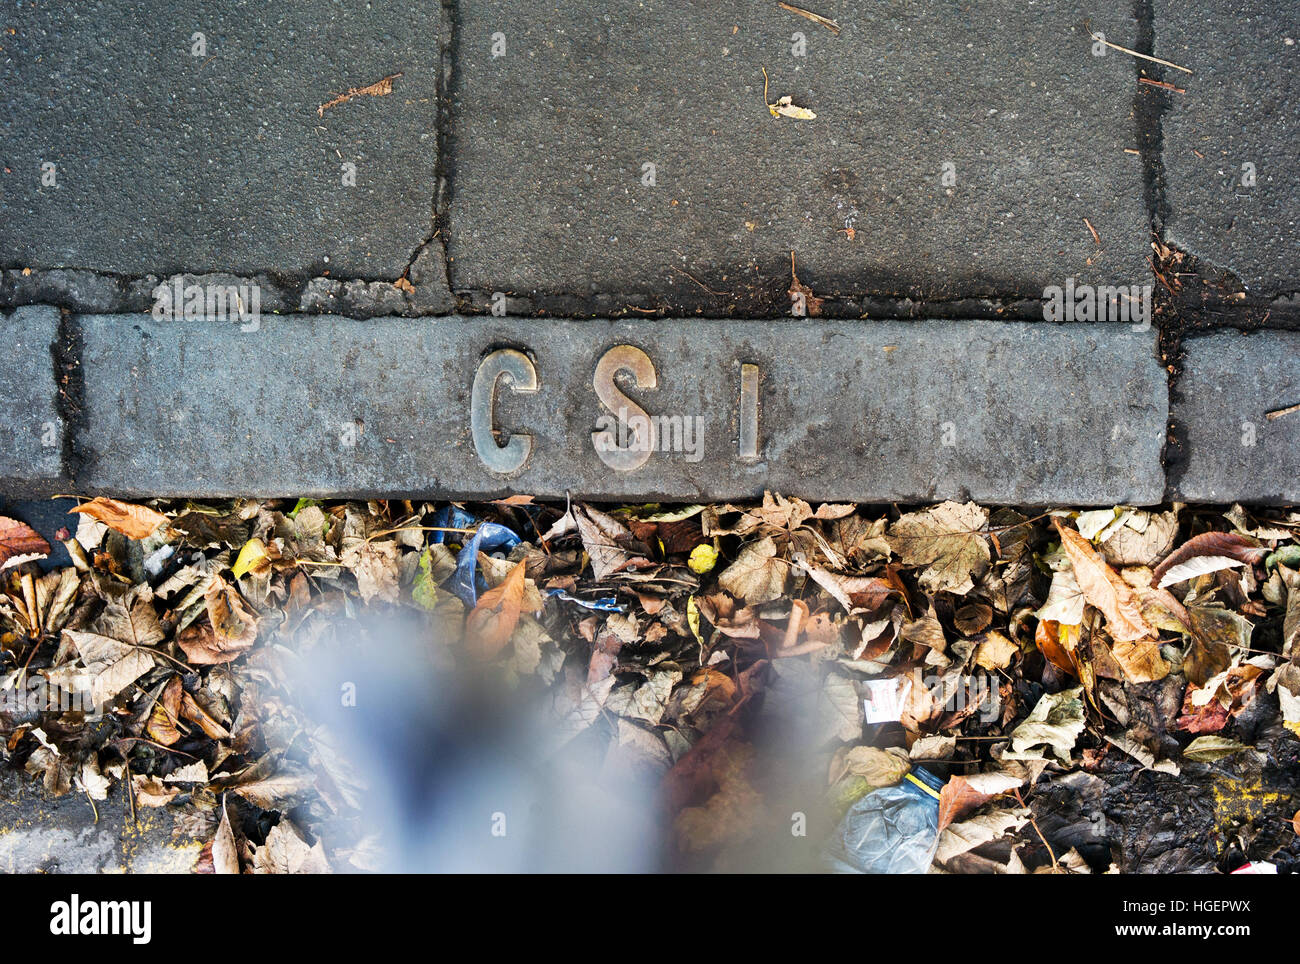 Metall-CSI-Schriftzug auf Edinburgh Plasterung Stockfoto